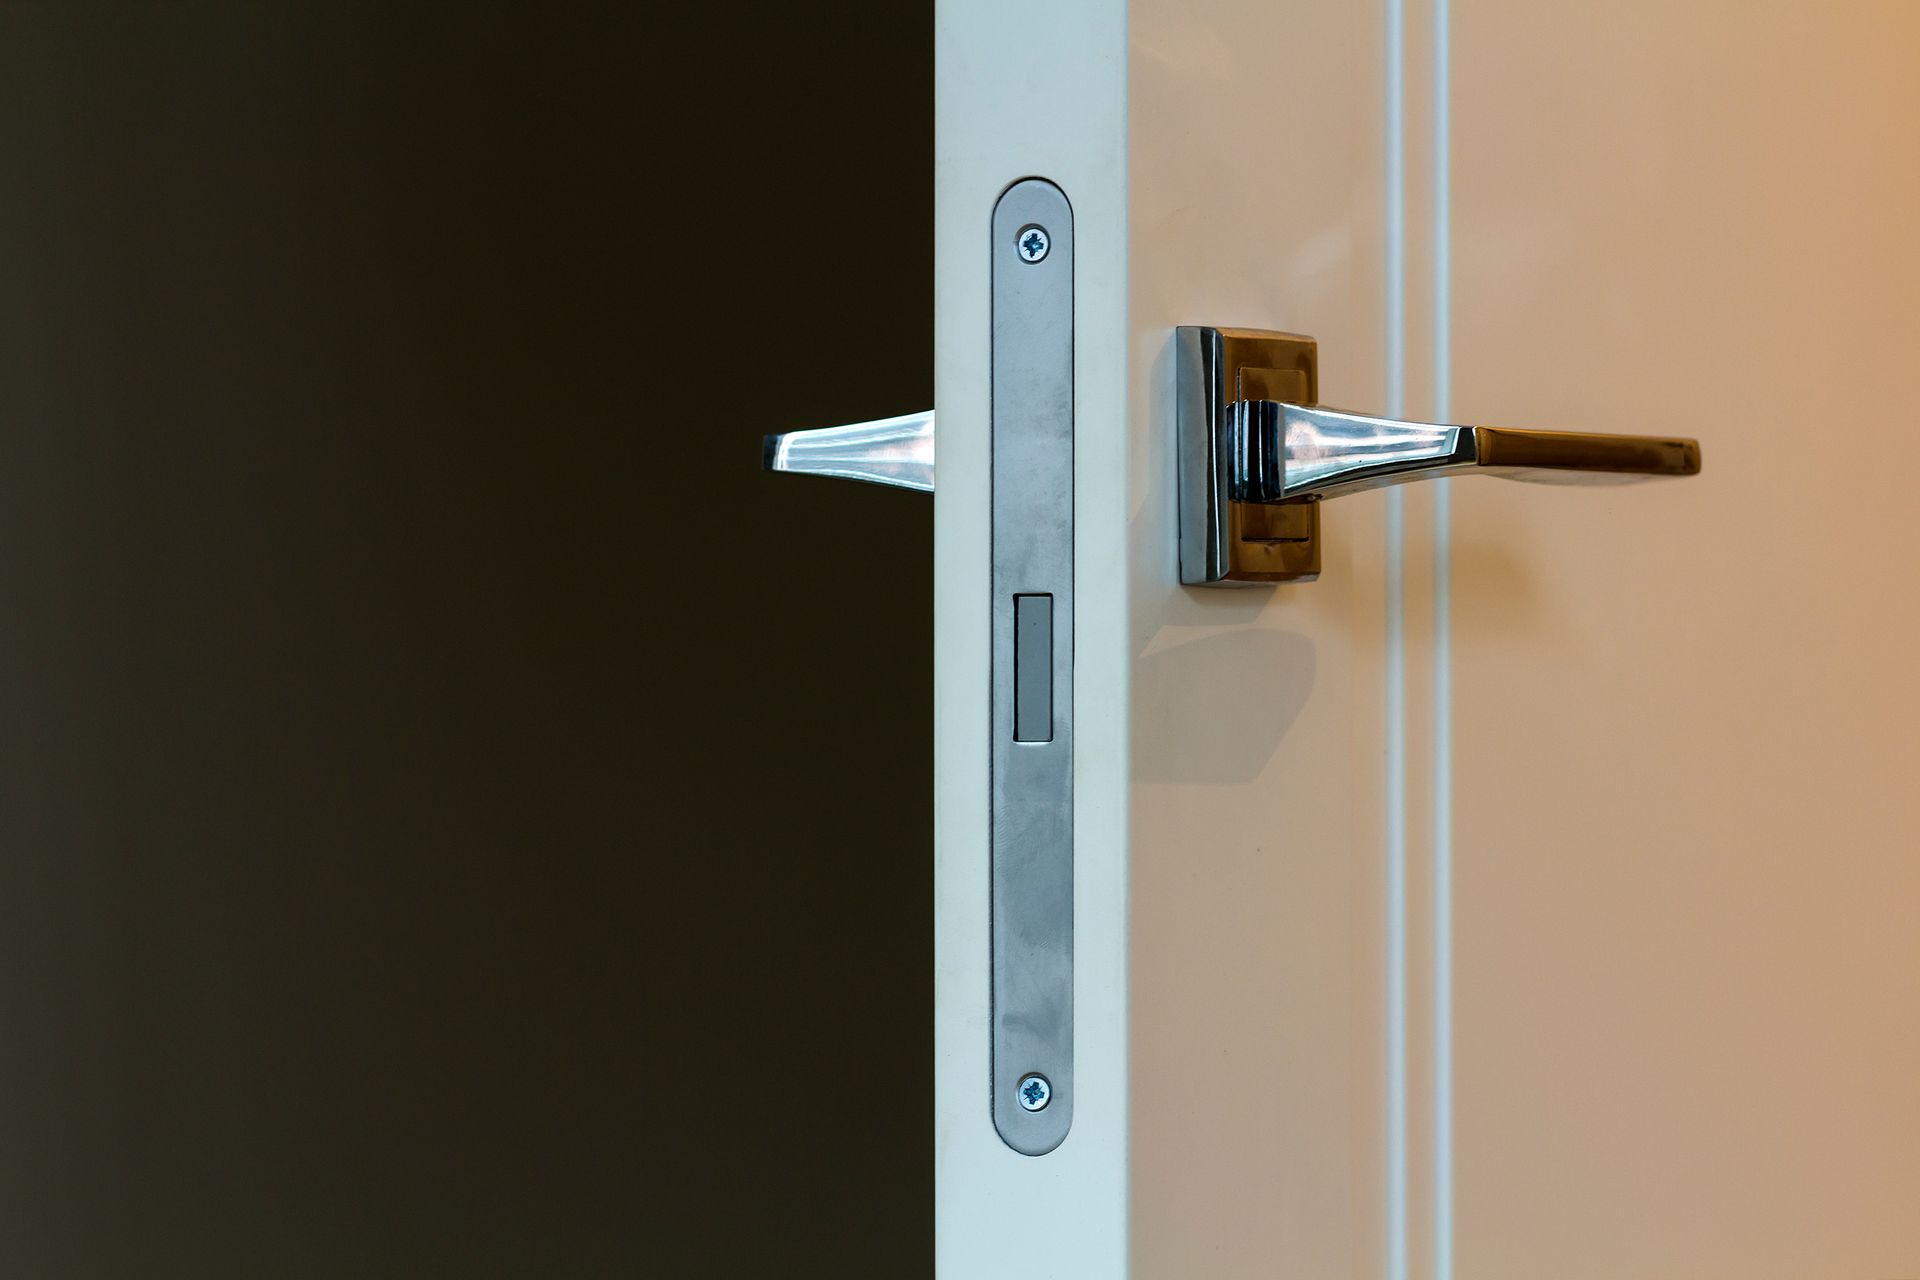 steel lock system and handles on a wooden door